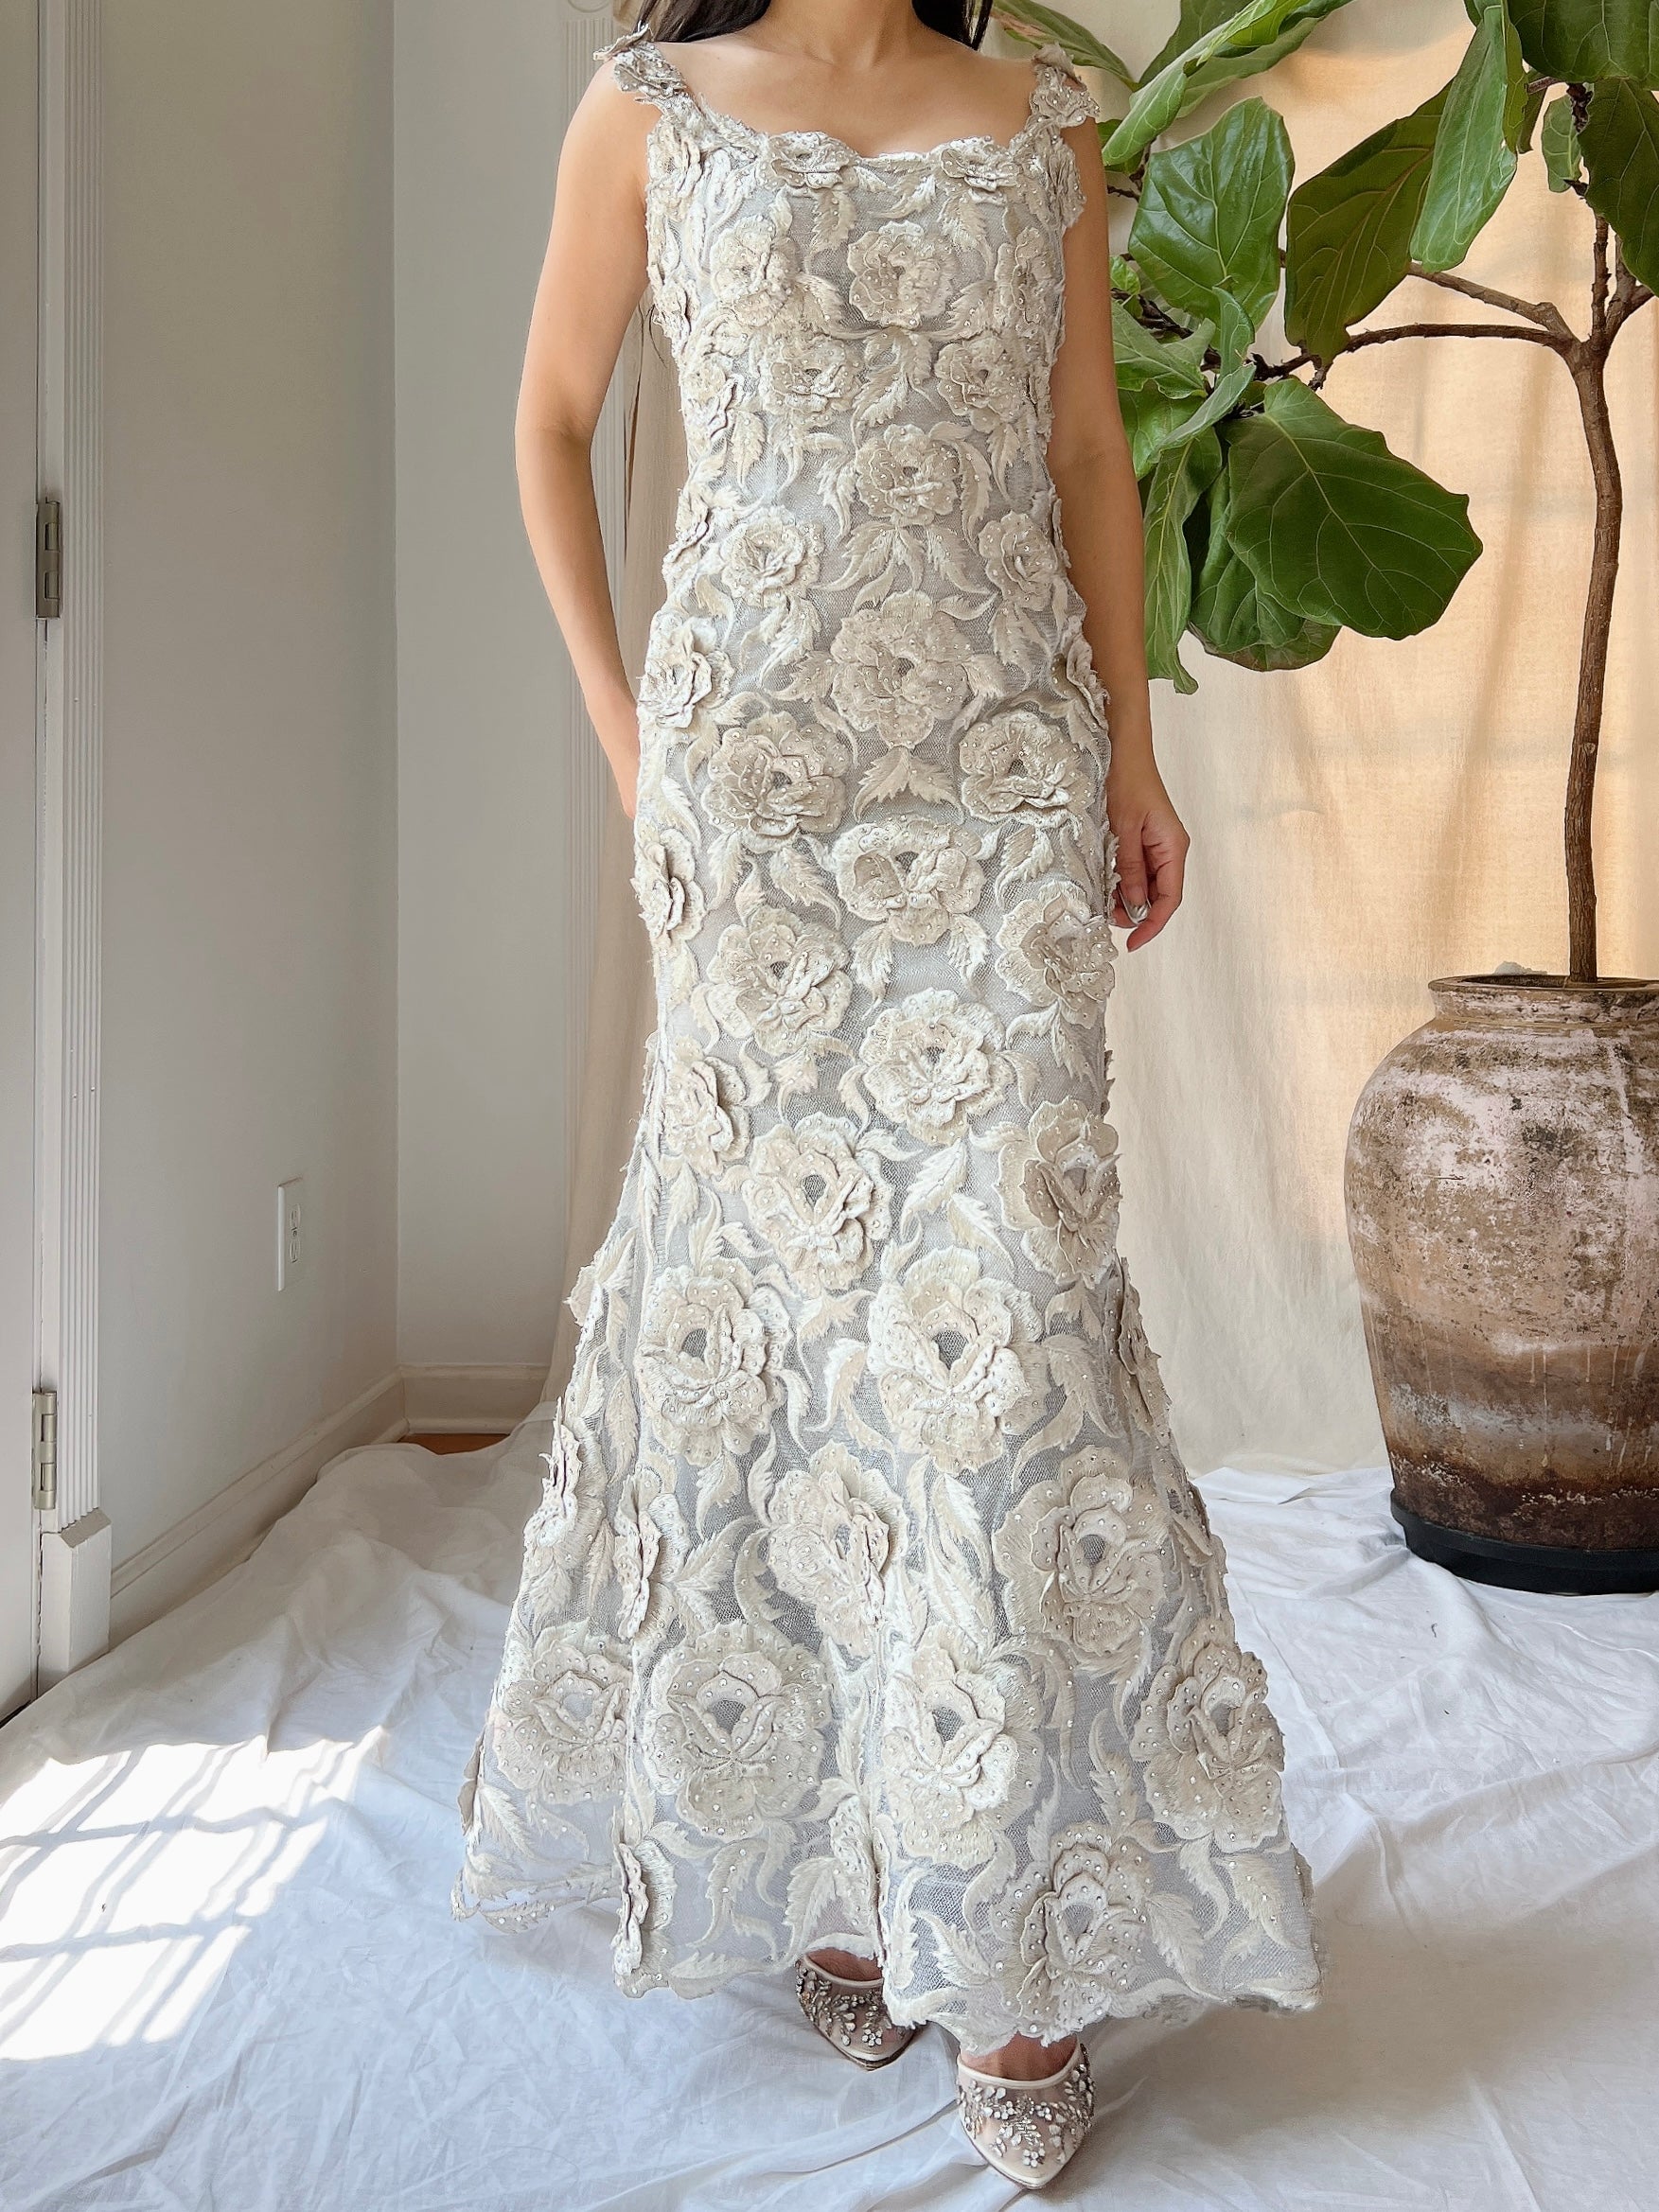 Fe Zandi Couture 3D Rose Gown - S/4